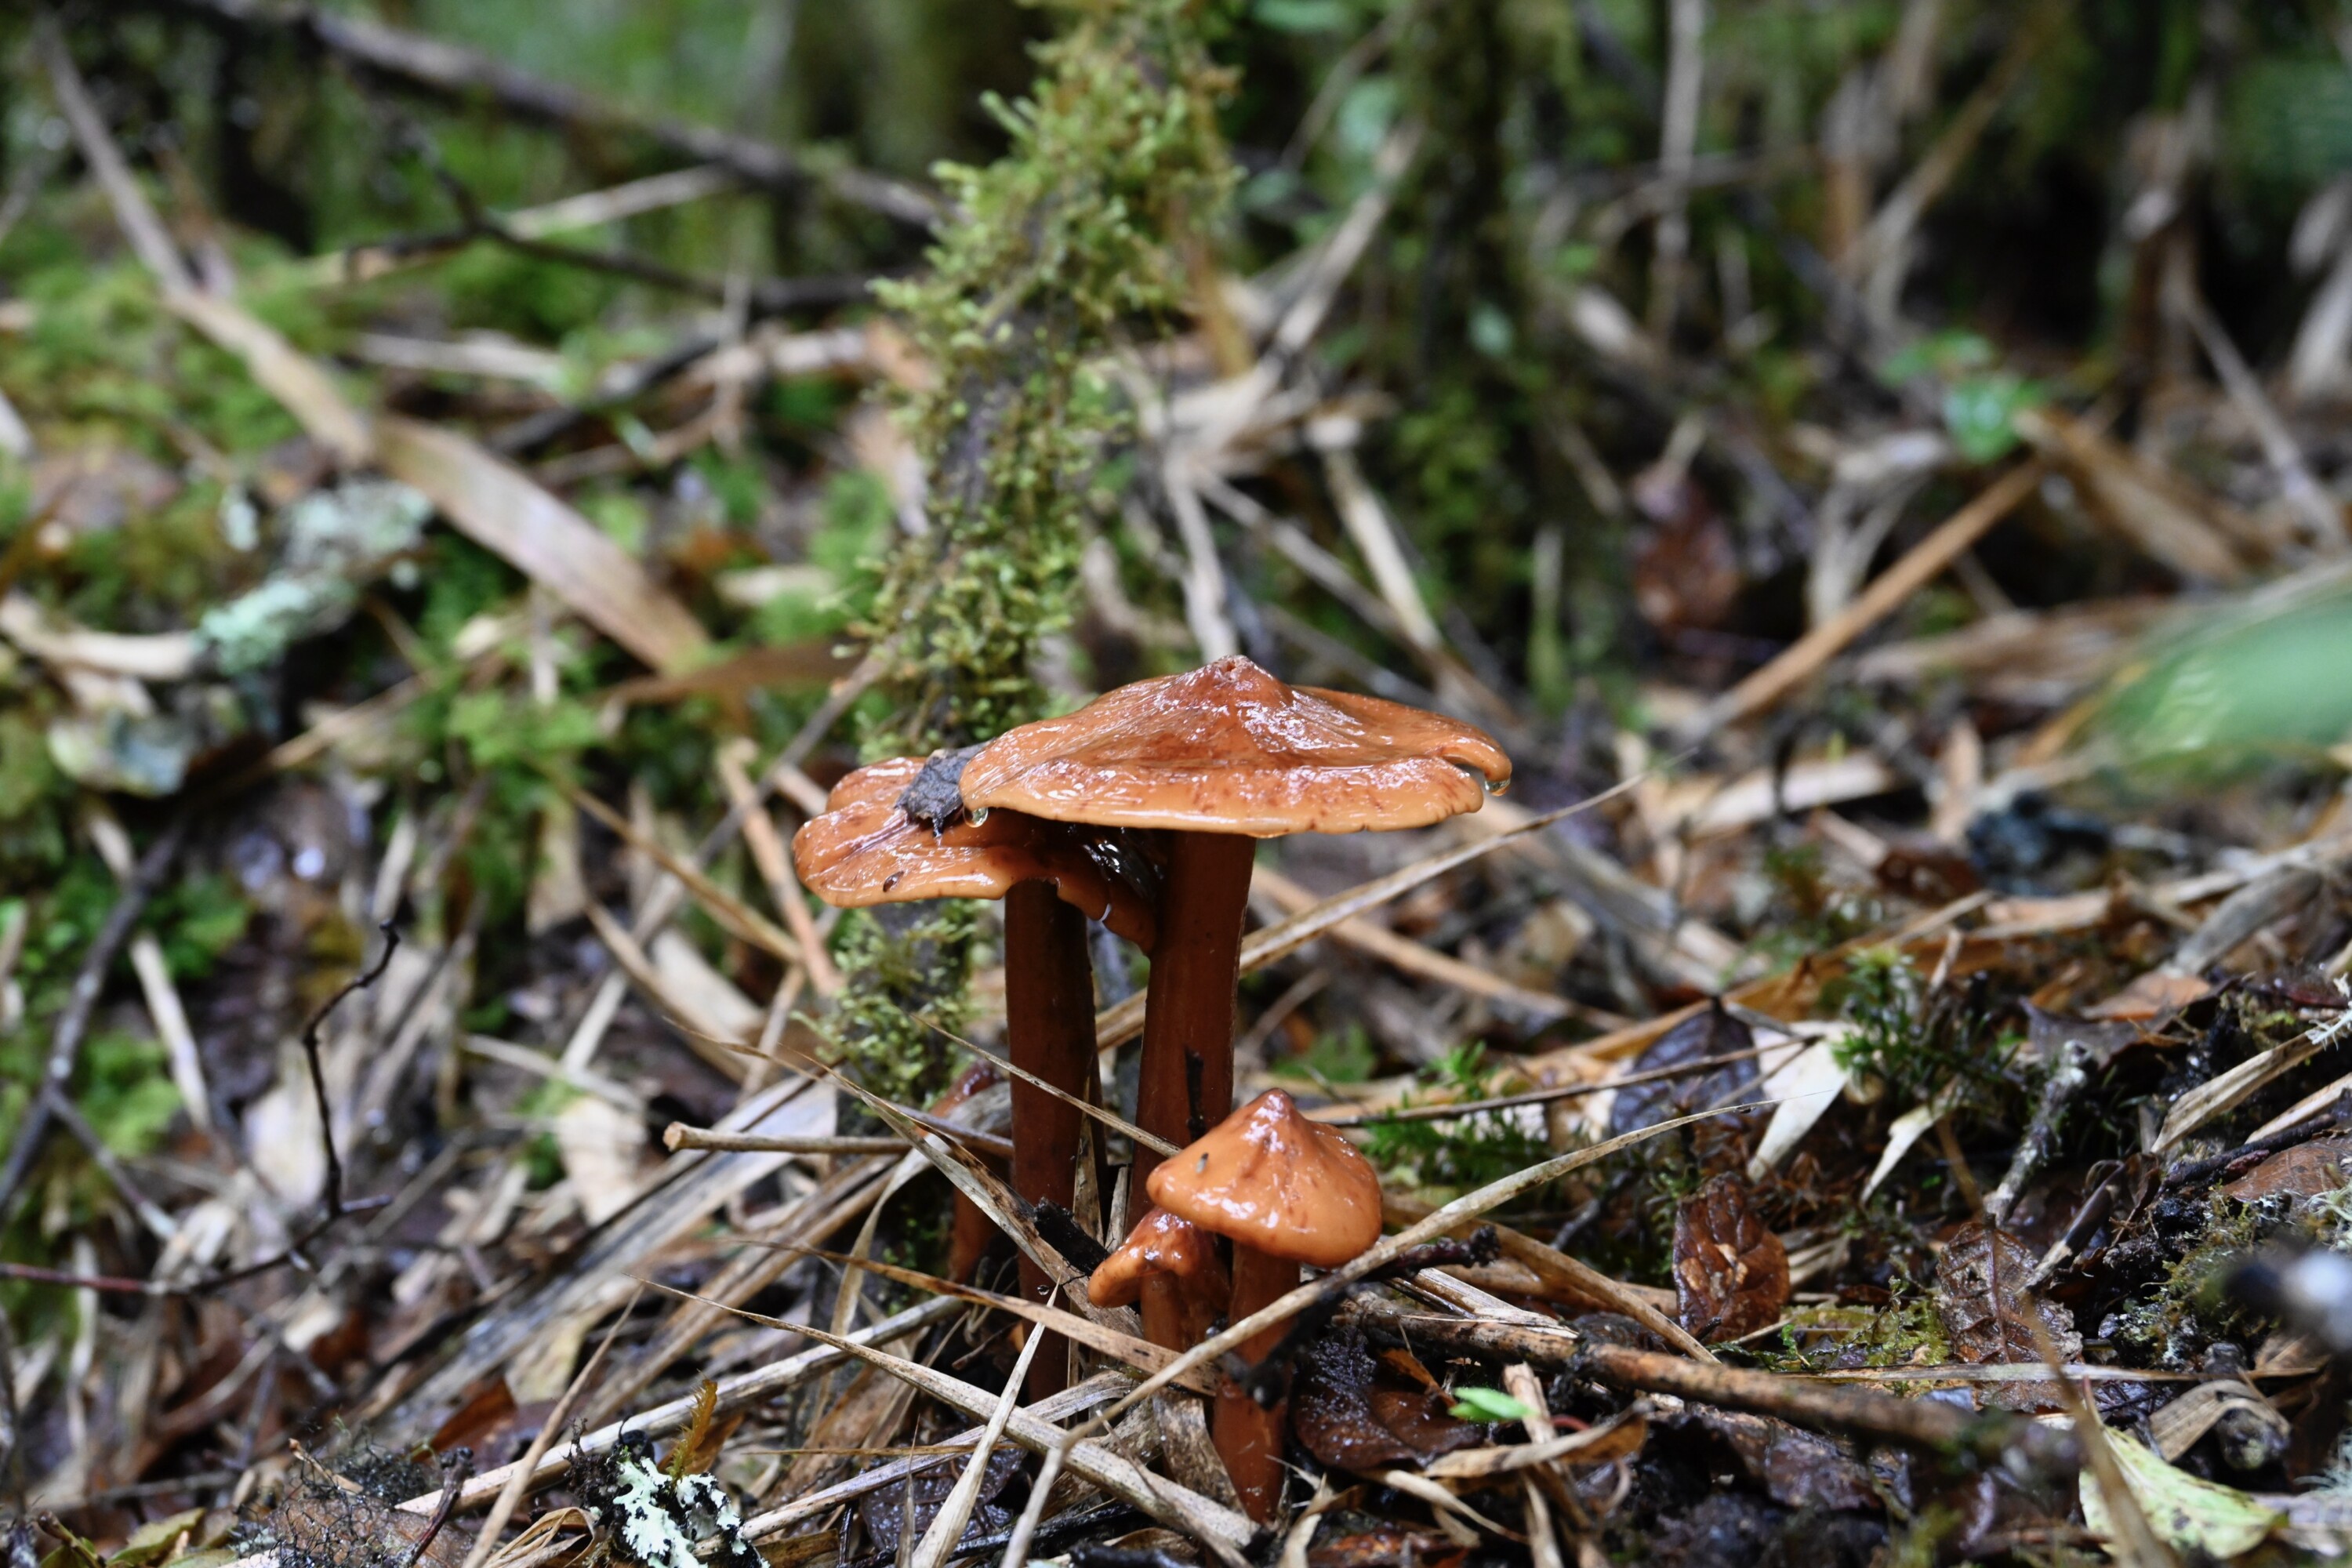 Wet, orange-brown mushrooms emerging among leaf litter in Los Quetzales National Park, Costa Rica